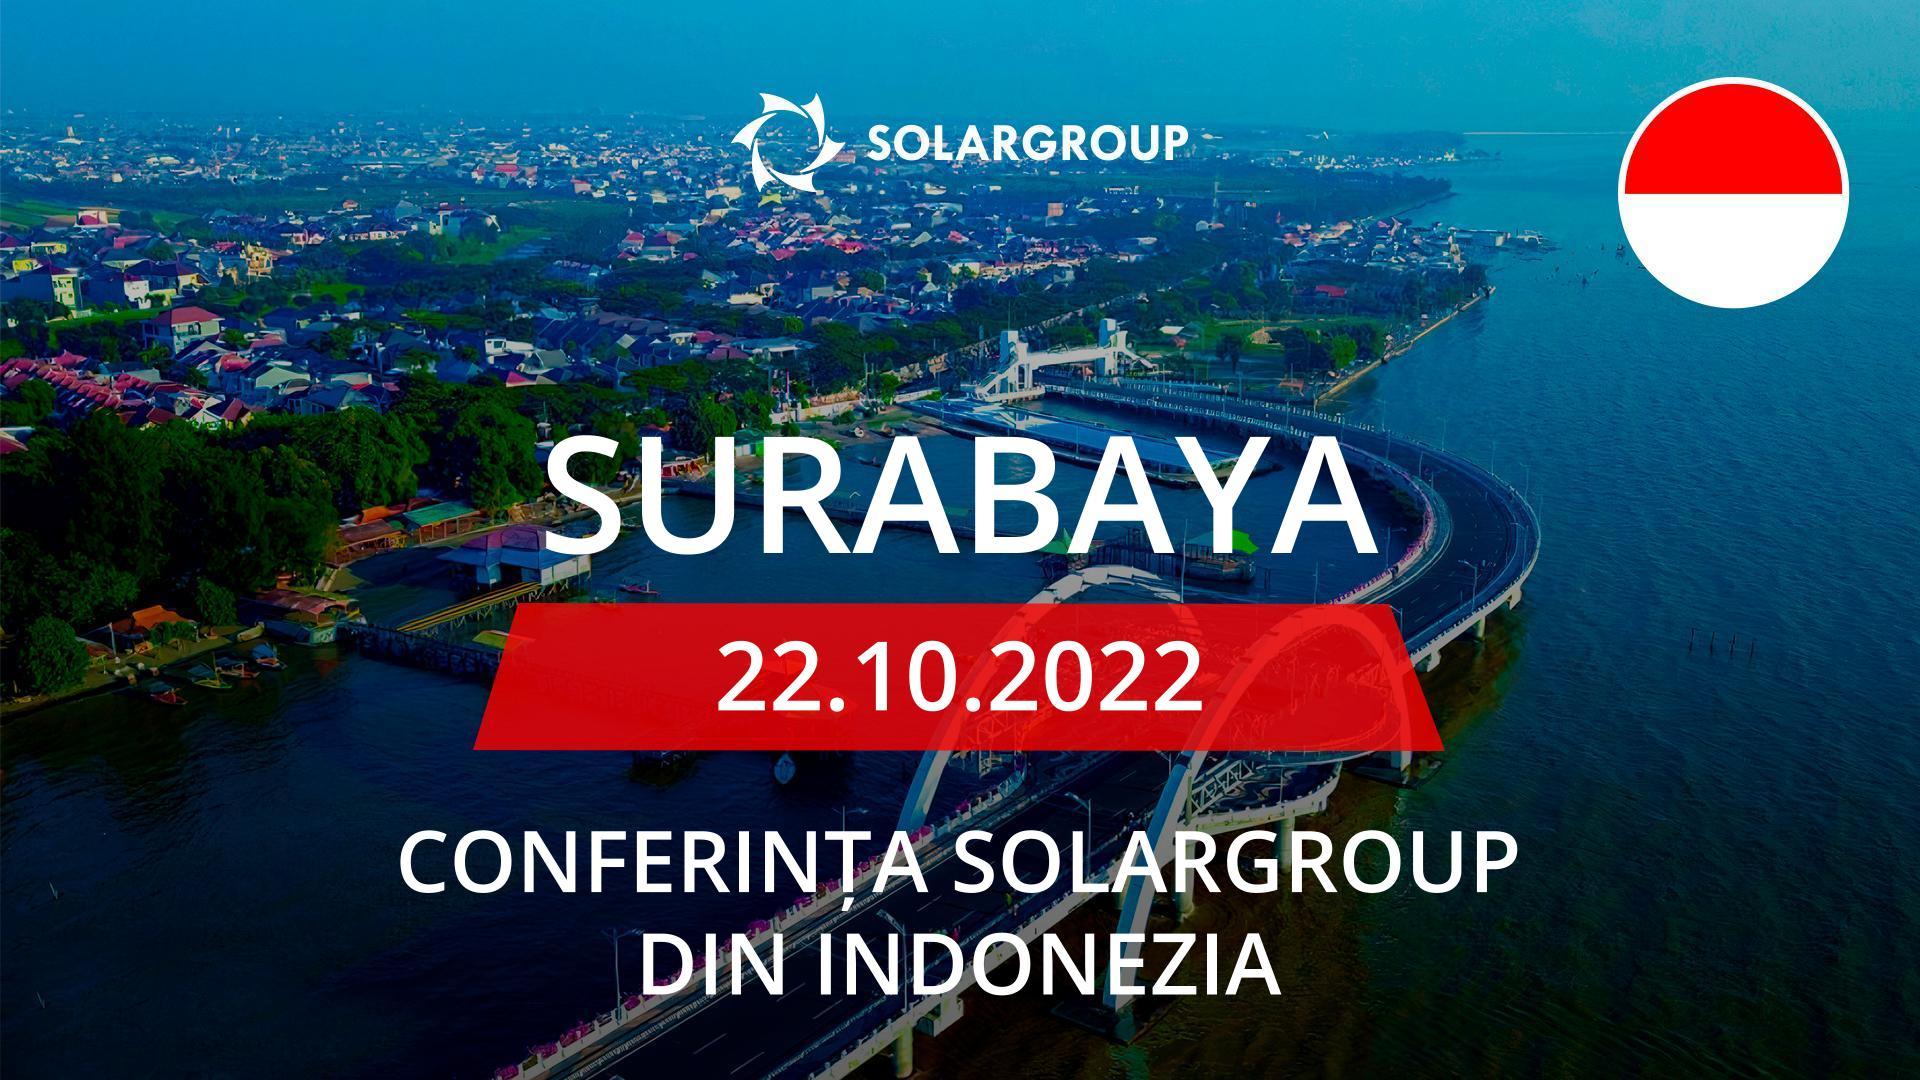 Conferința SOLARGROUP din Indonezia: 22 octombrie, Surabaya